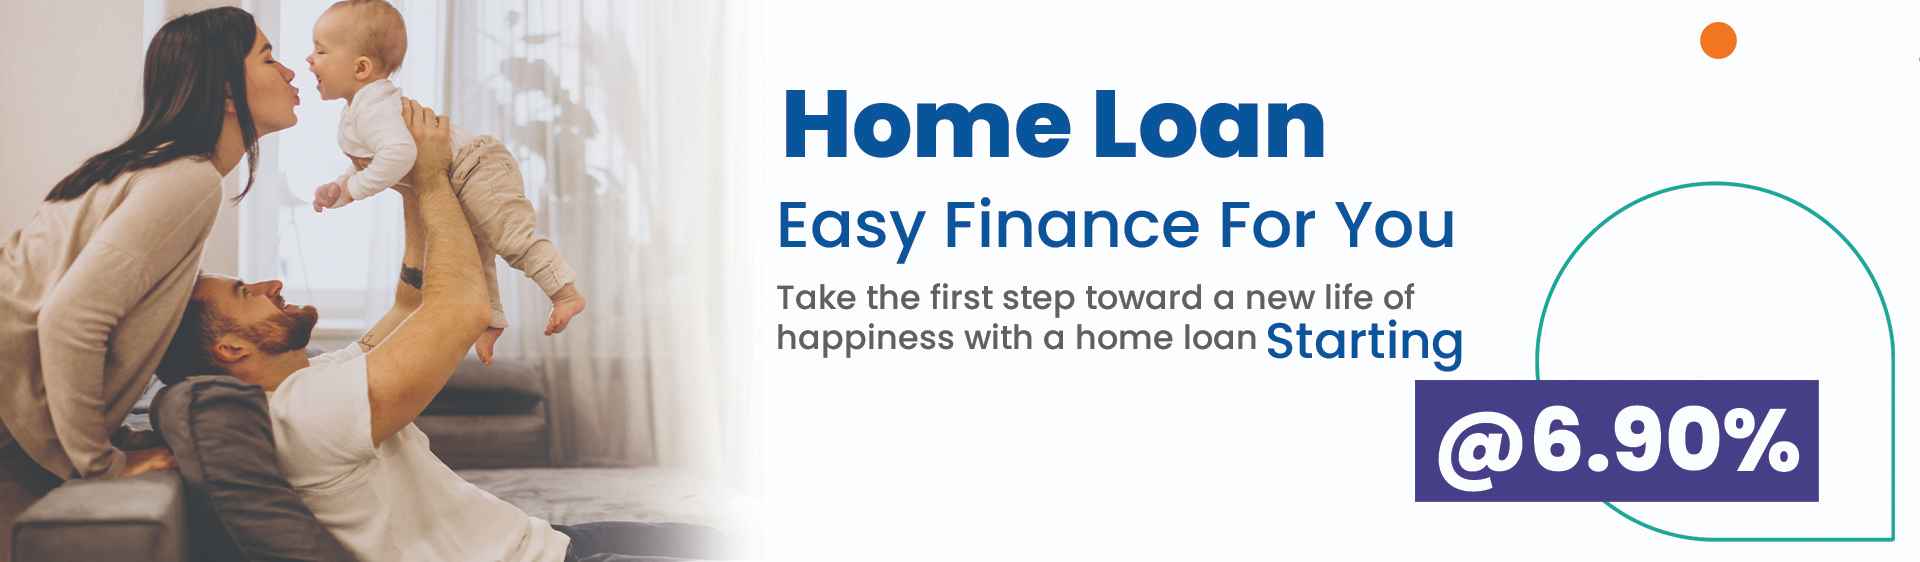 home loan offer